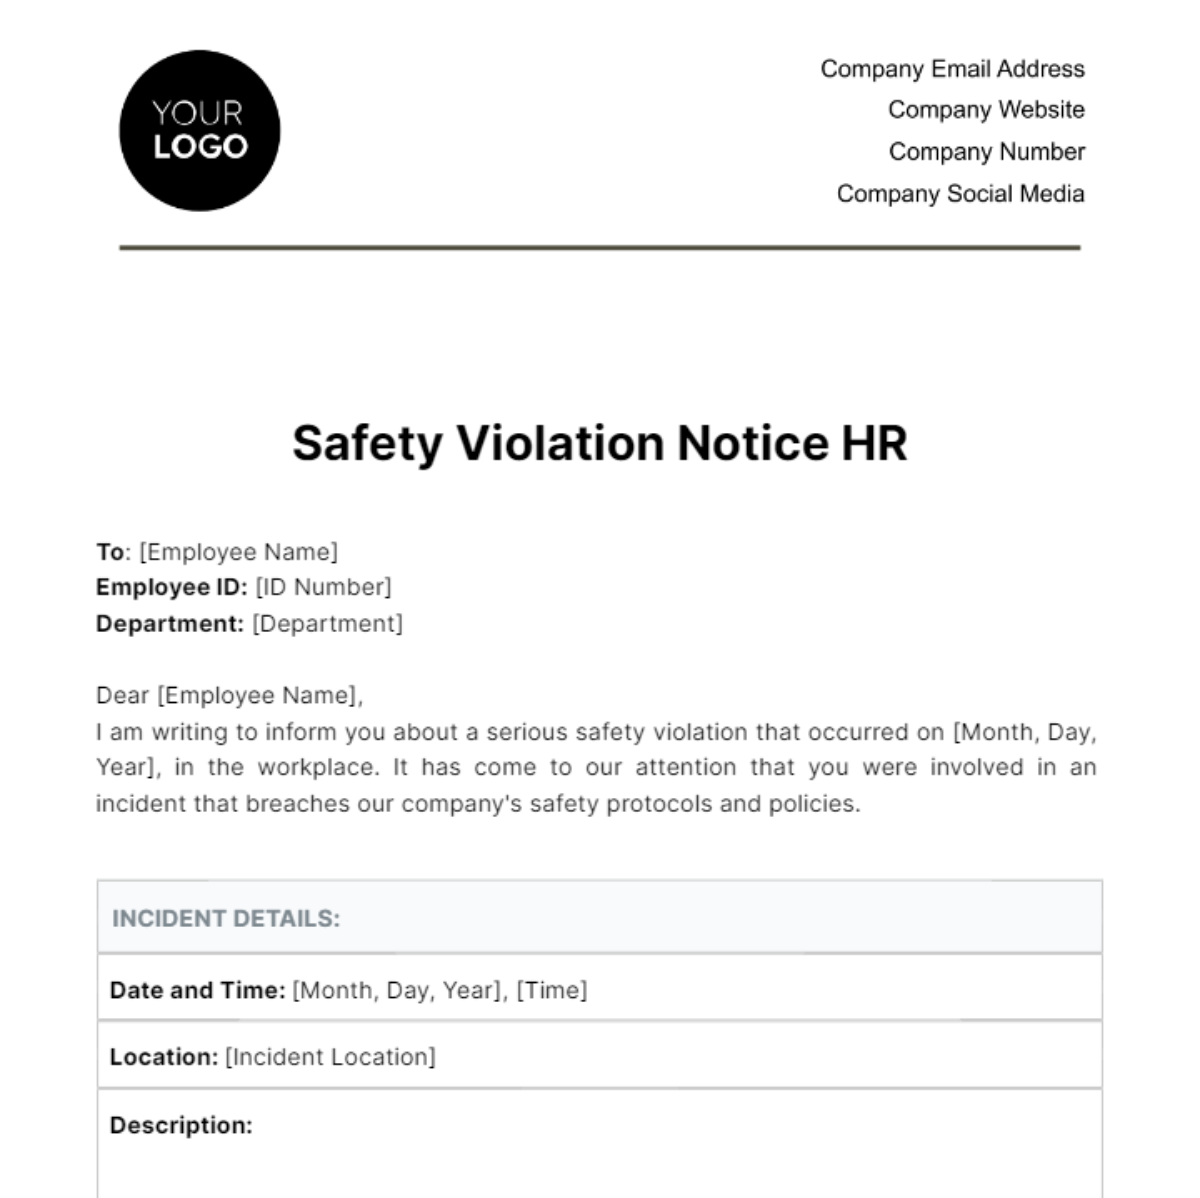 Safety Violation Notice HR Template